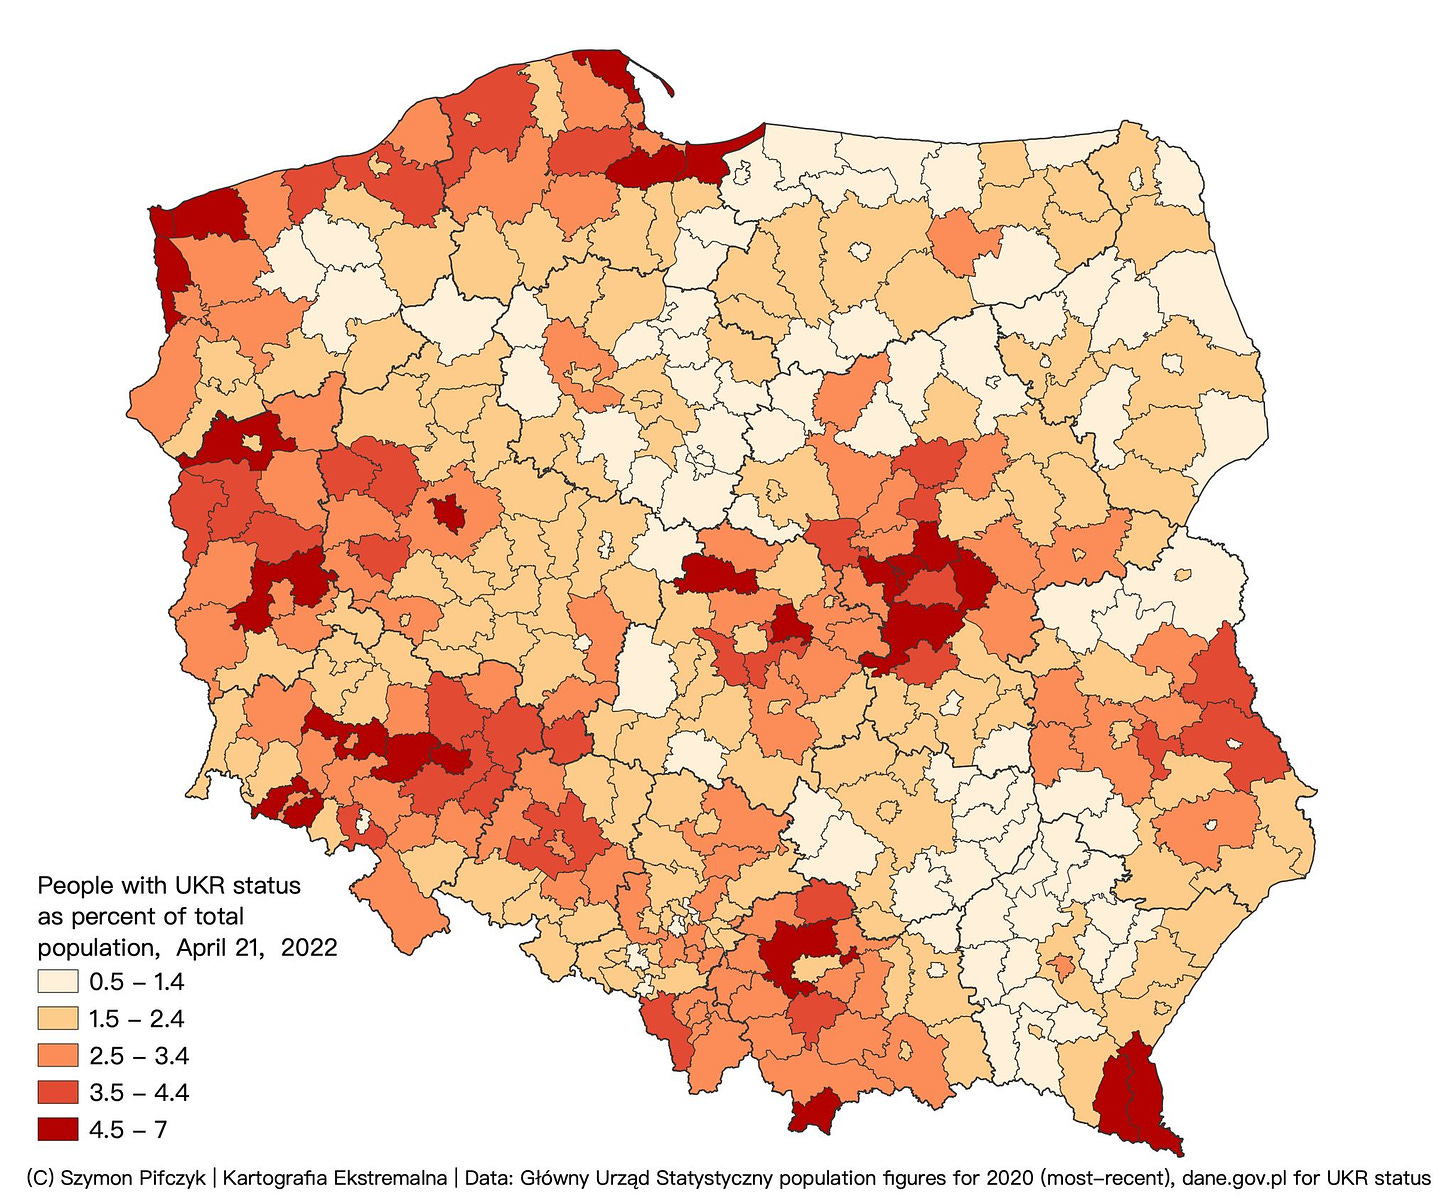 May be an image of text that says 'People PeoplewithUKRstatus with UKR status as percent total population, April 21, 2022 0.5-1.4 0.5 1.5-2.4 2.5-3.4 3.5-4.4 3.5 4.5-7 (C) Szymon Pifczyk Kartograta Ekstremalna Data: Główny Urzad Statystyczny population figures for 2020 (most-recent), lane .gov.pl for UKR status'